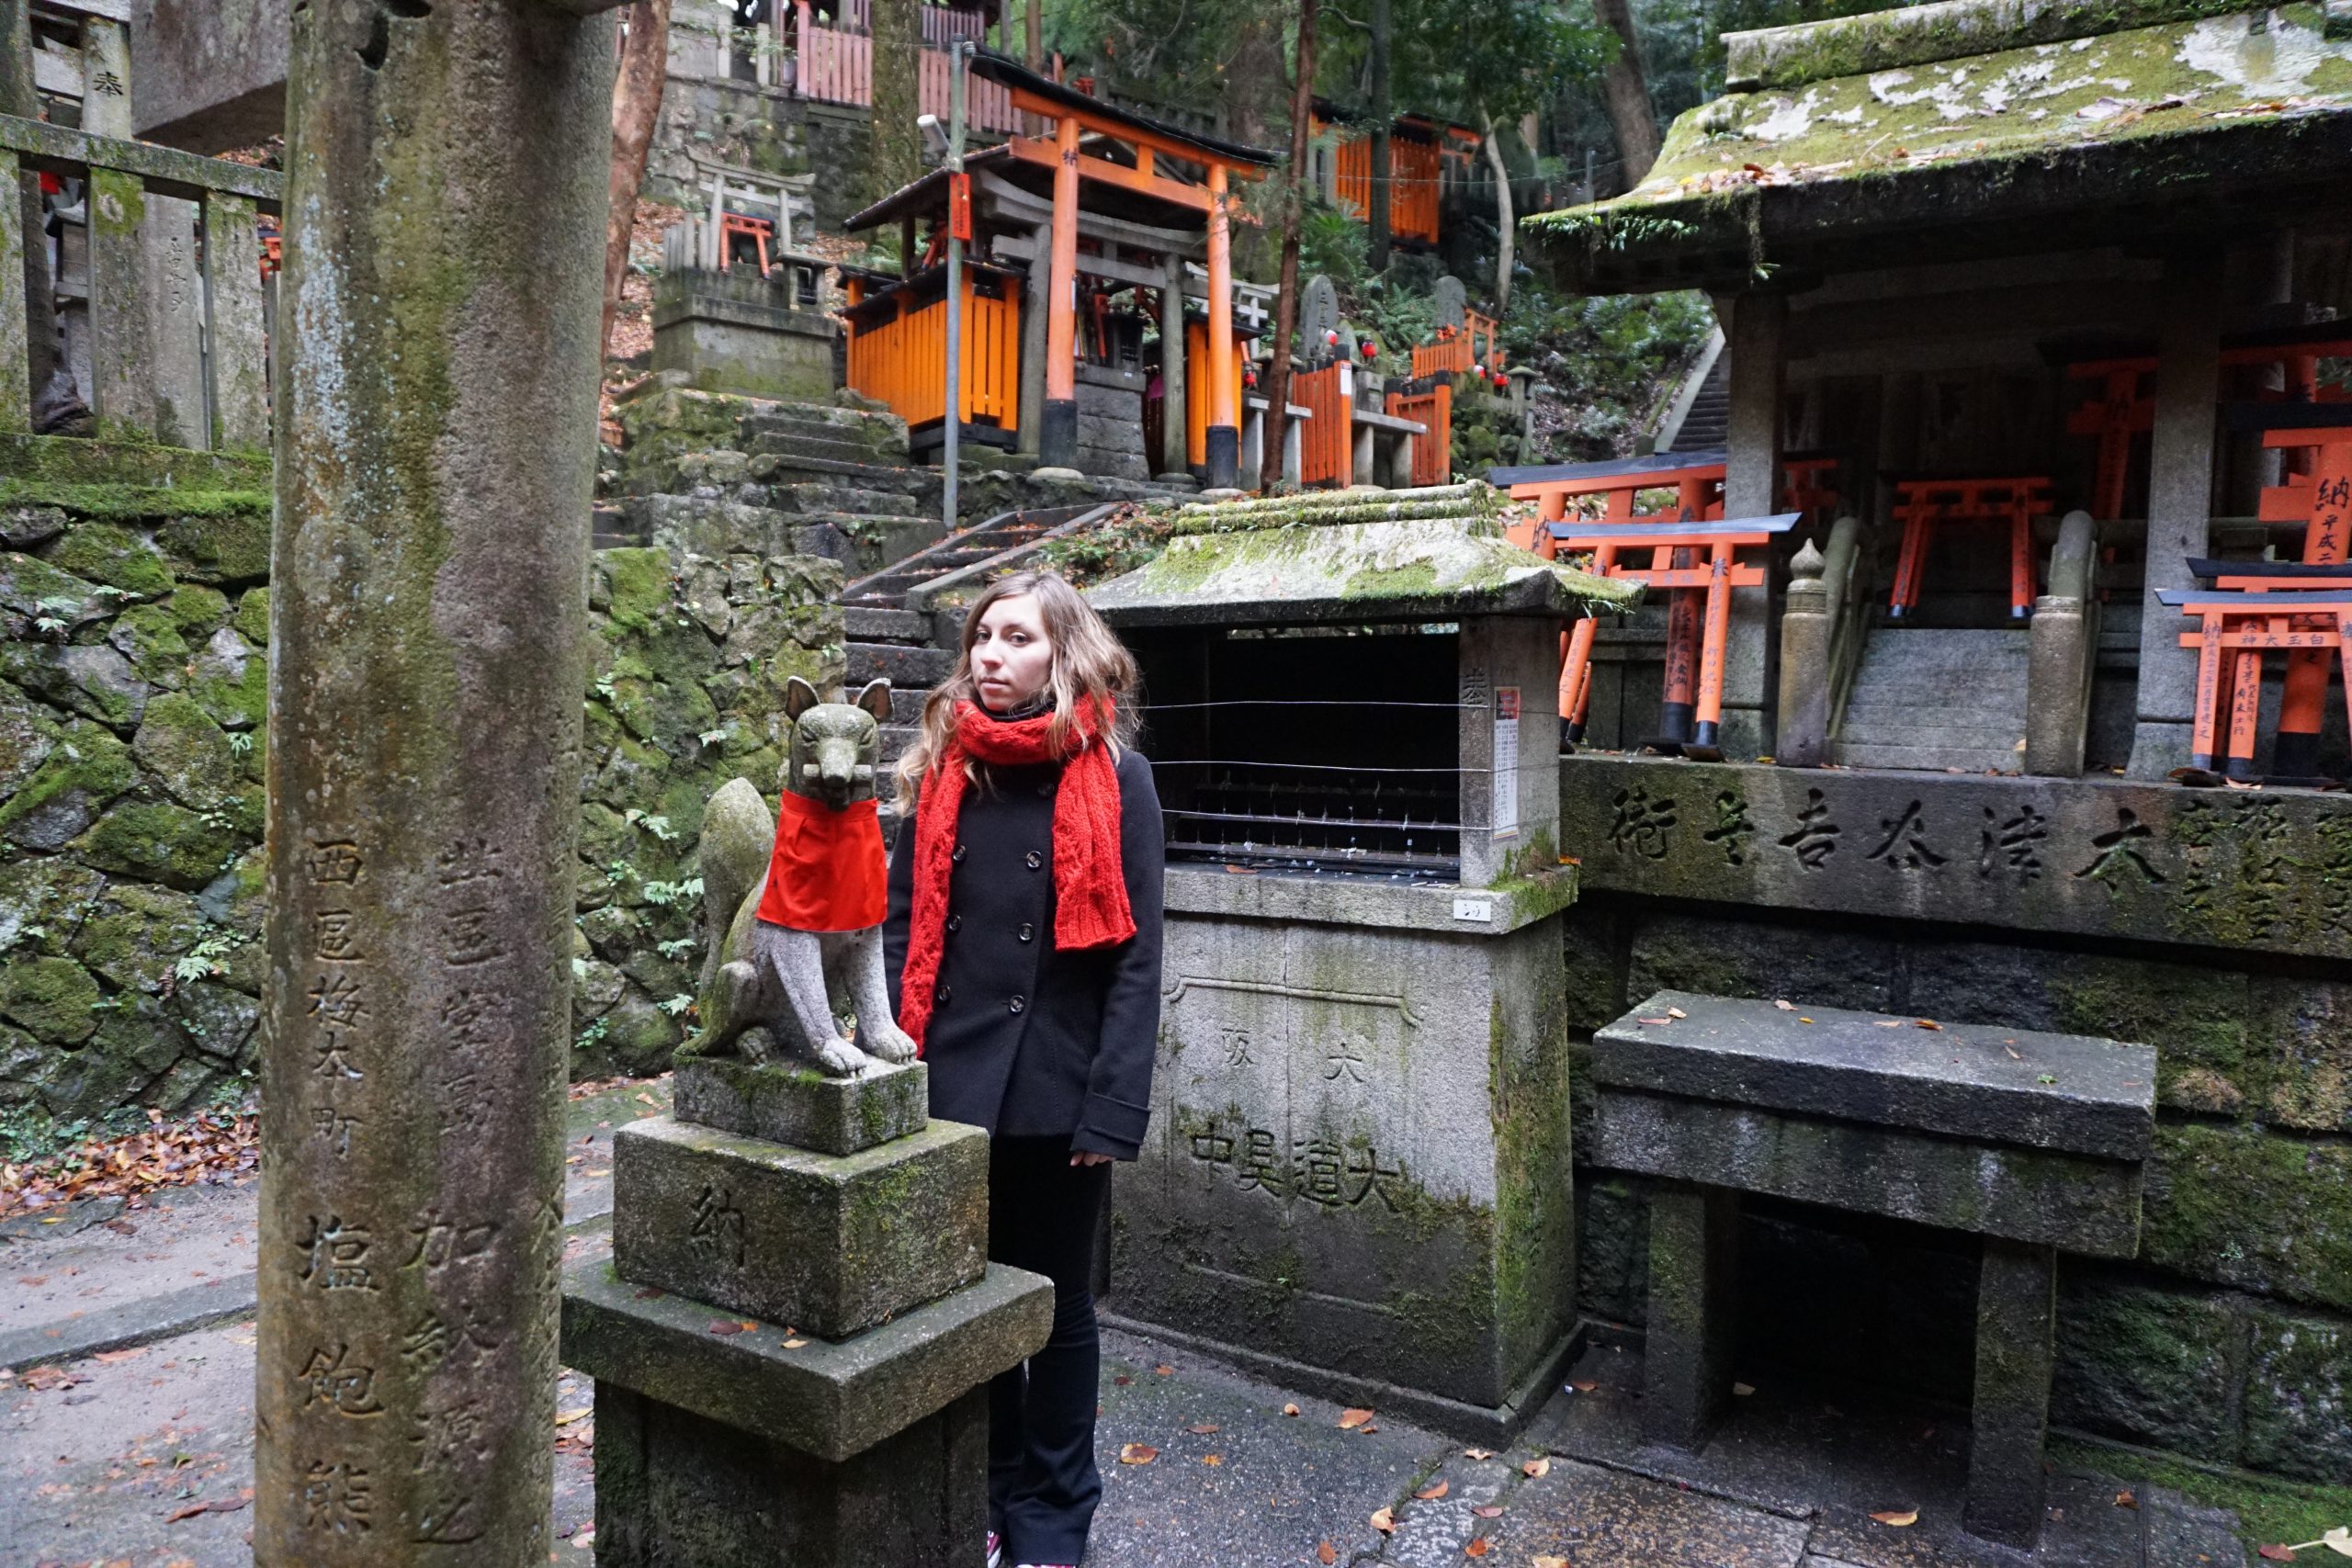 Kitsune at Fushimi Inari shrine holding a scroll in its mouth